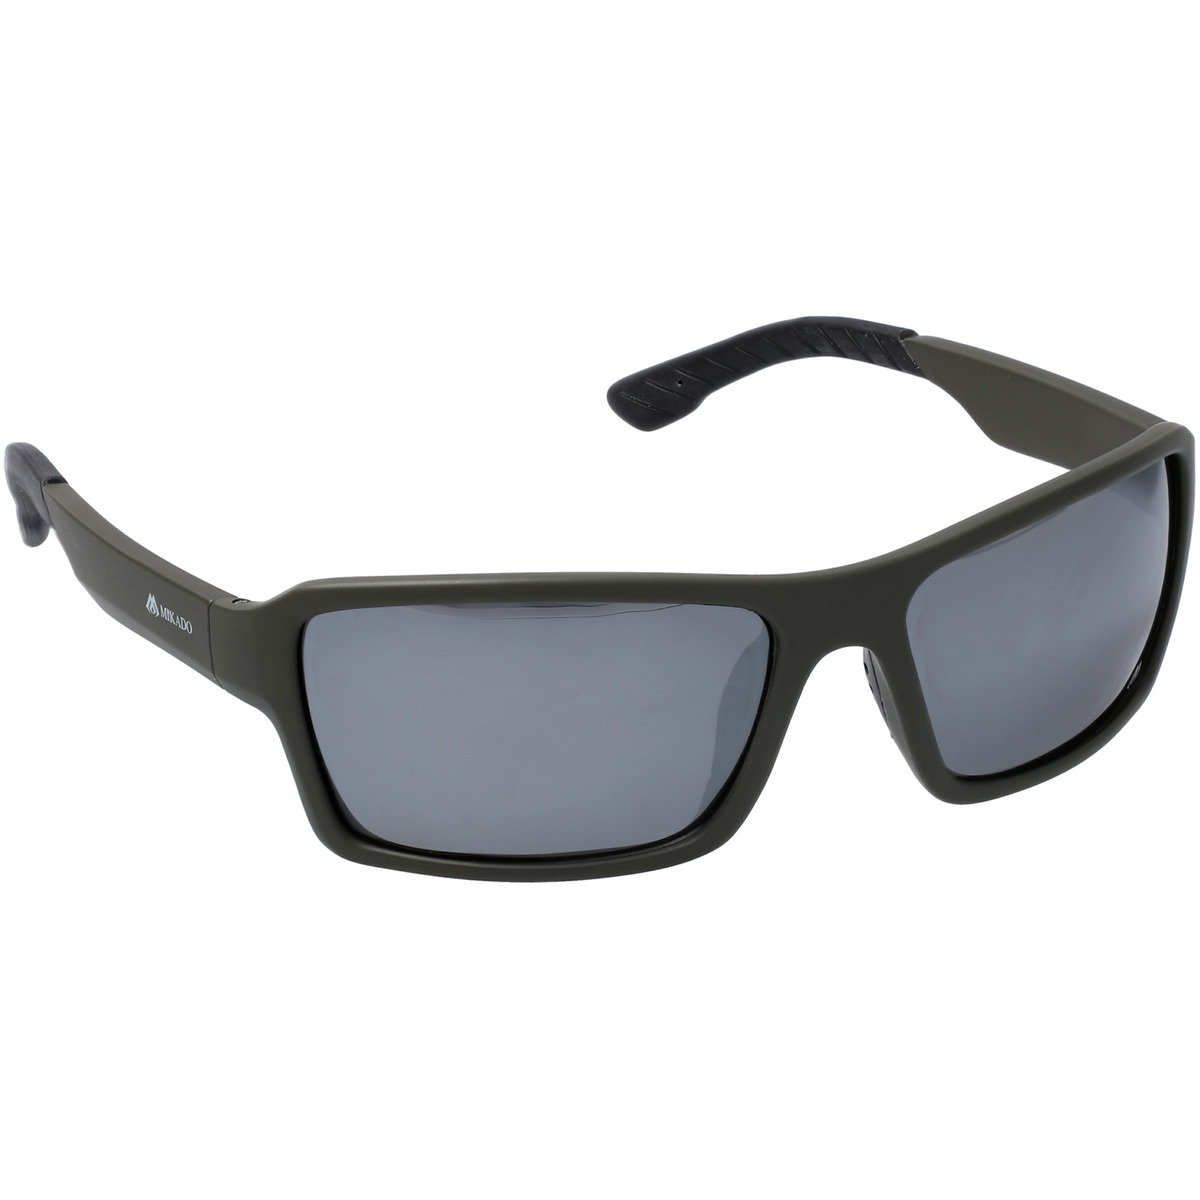 Mikado Sunglasses Polarized - 244 GREY MIRROR EFFECT